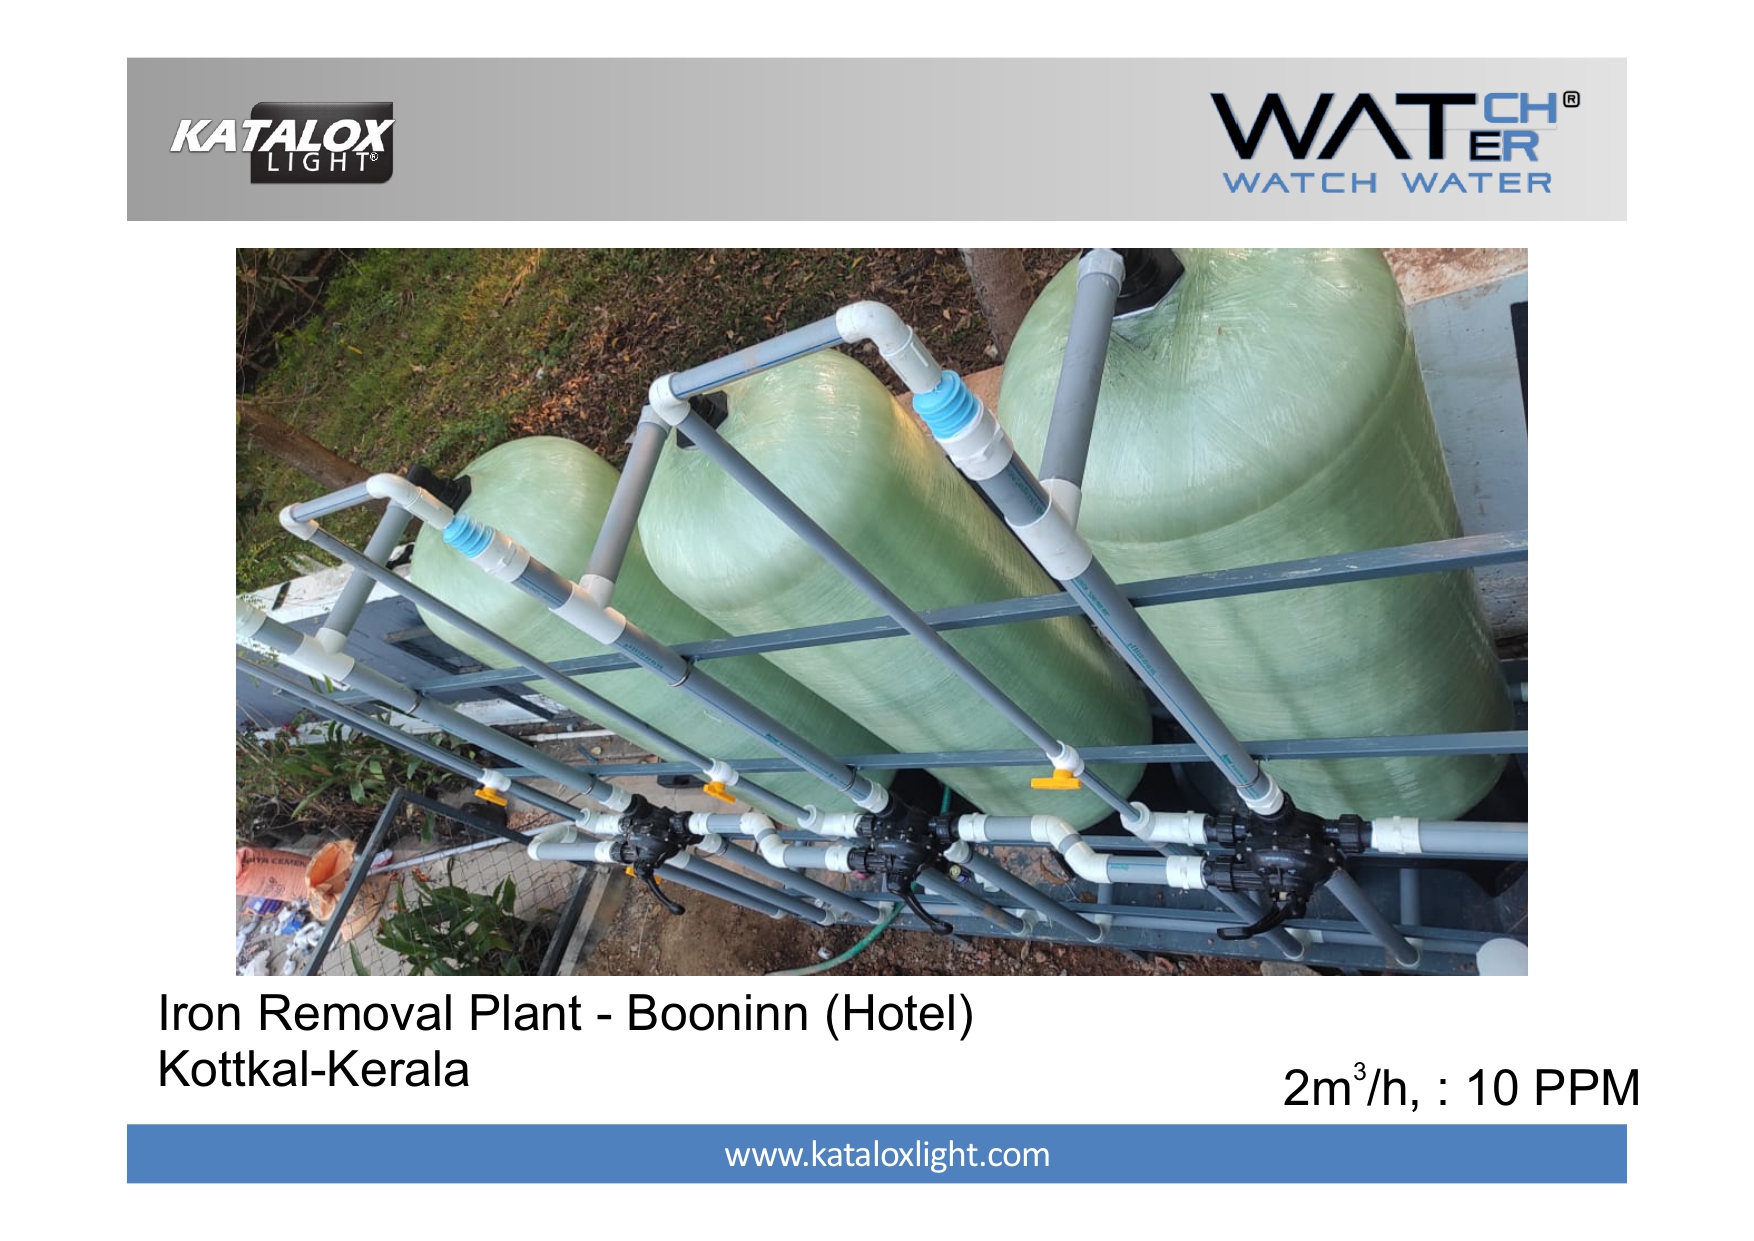 CH®
Tee WAT:
SL WATCH —.

 

Iron Removal Plant - Booninn (Hotel)
Kottkal-Kerala 2m¥h. : 10 PPM

 

www.kataloxlight.com